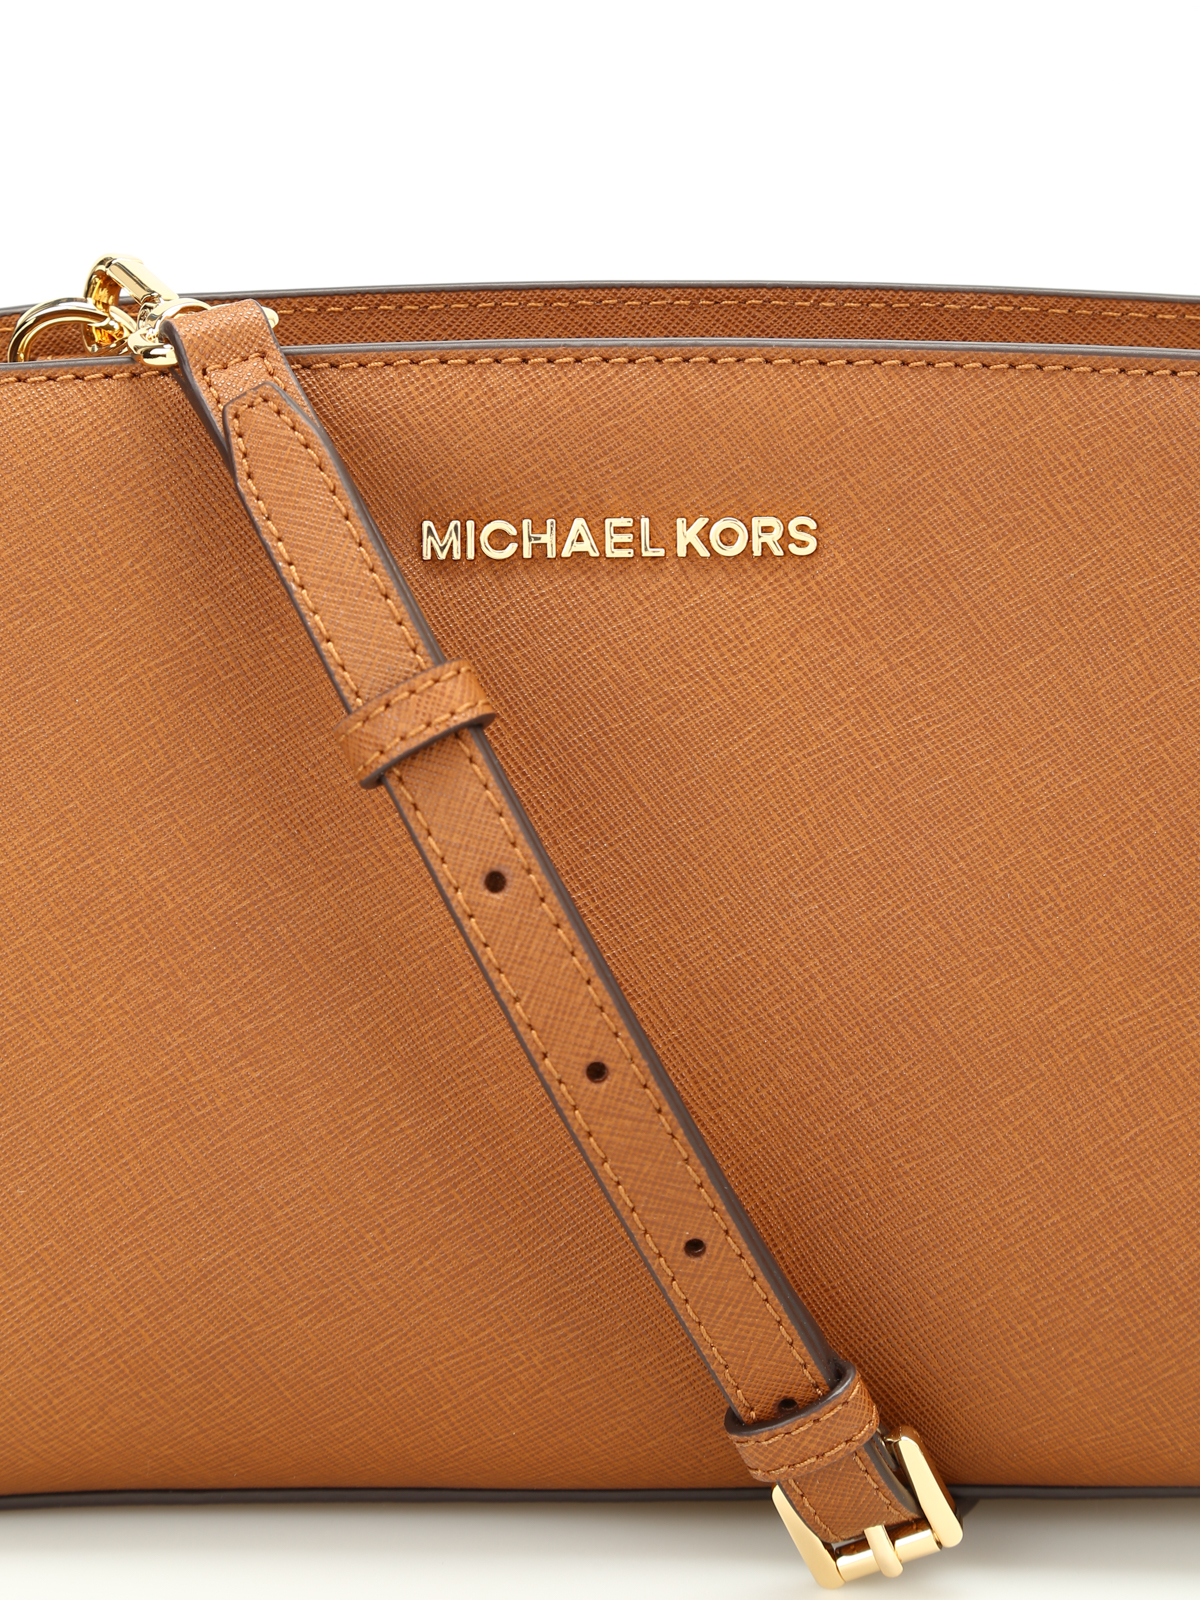 Michael Kors Selma Medium Saffiano Leather Messenger Crossbody Bag